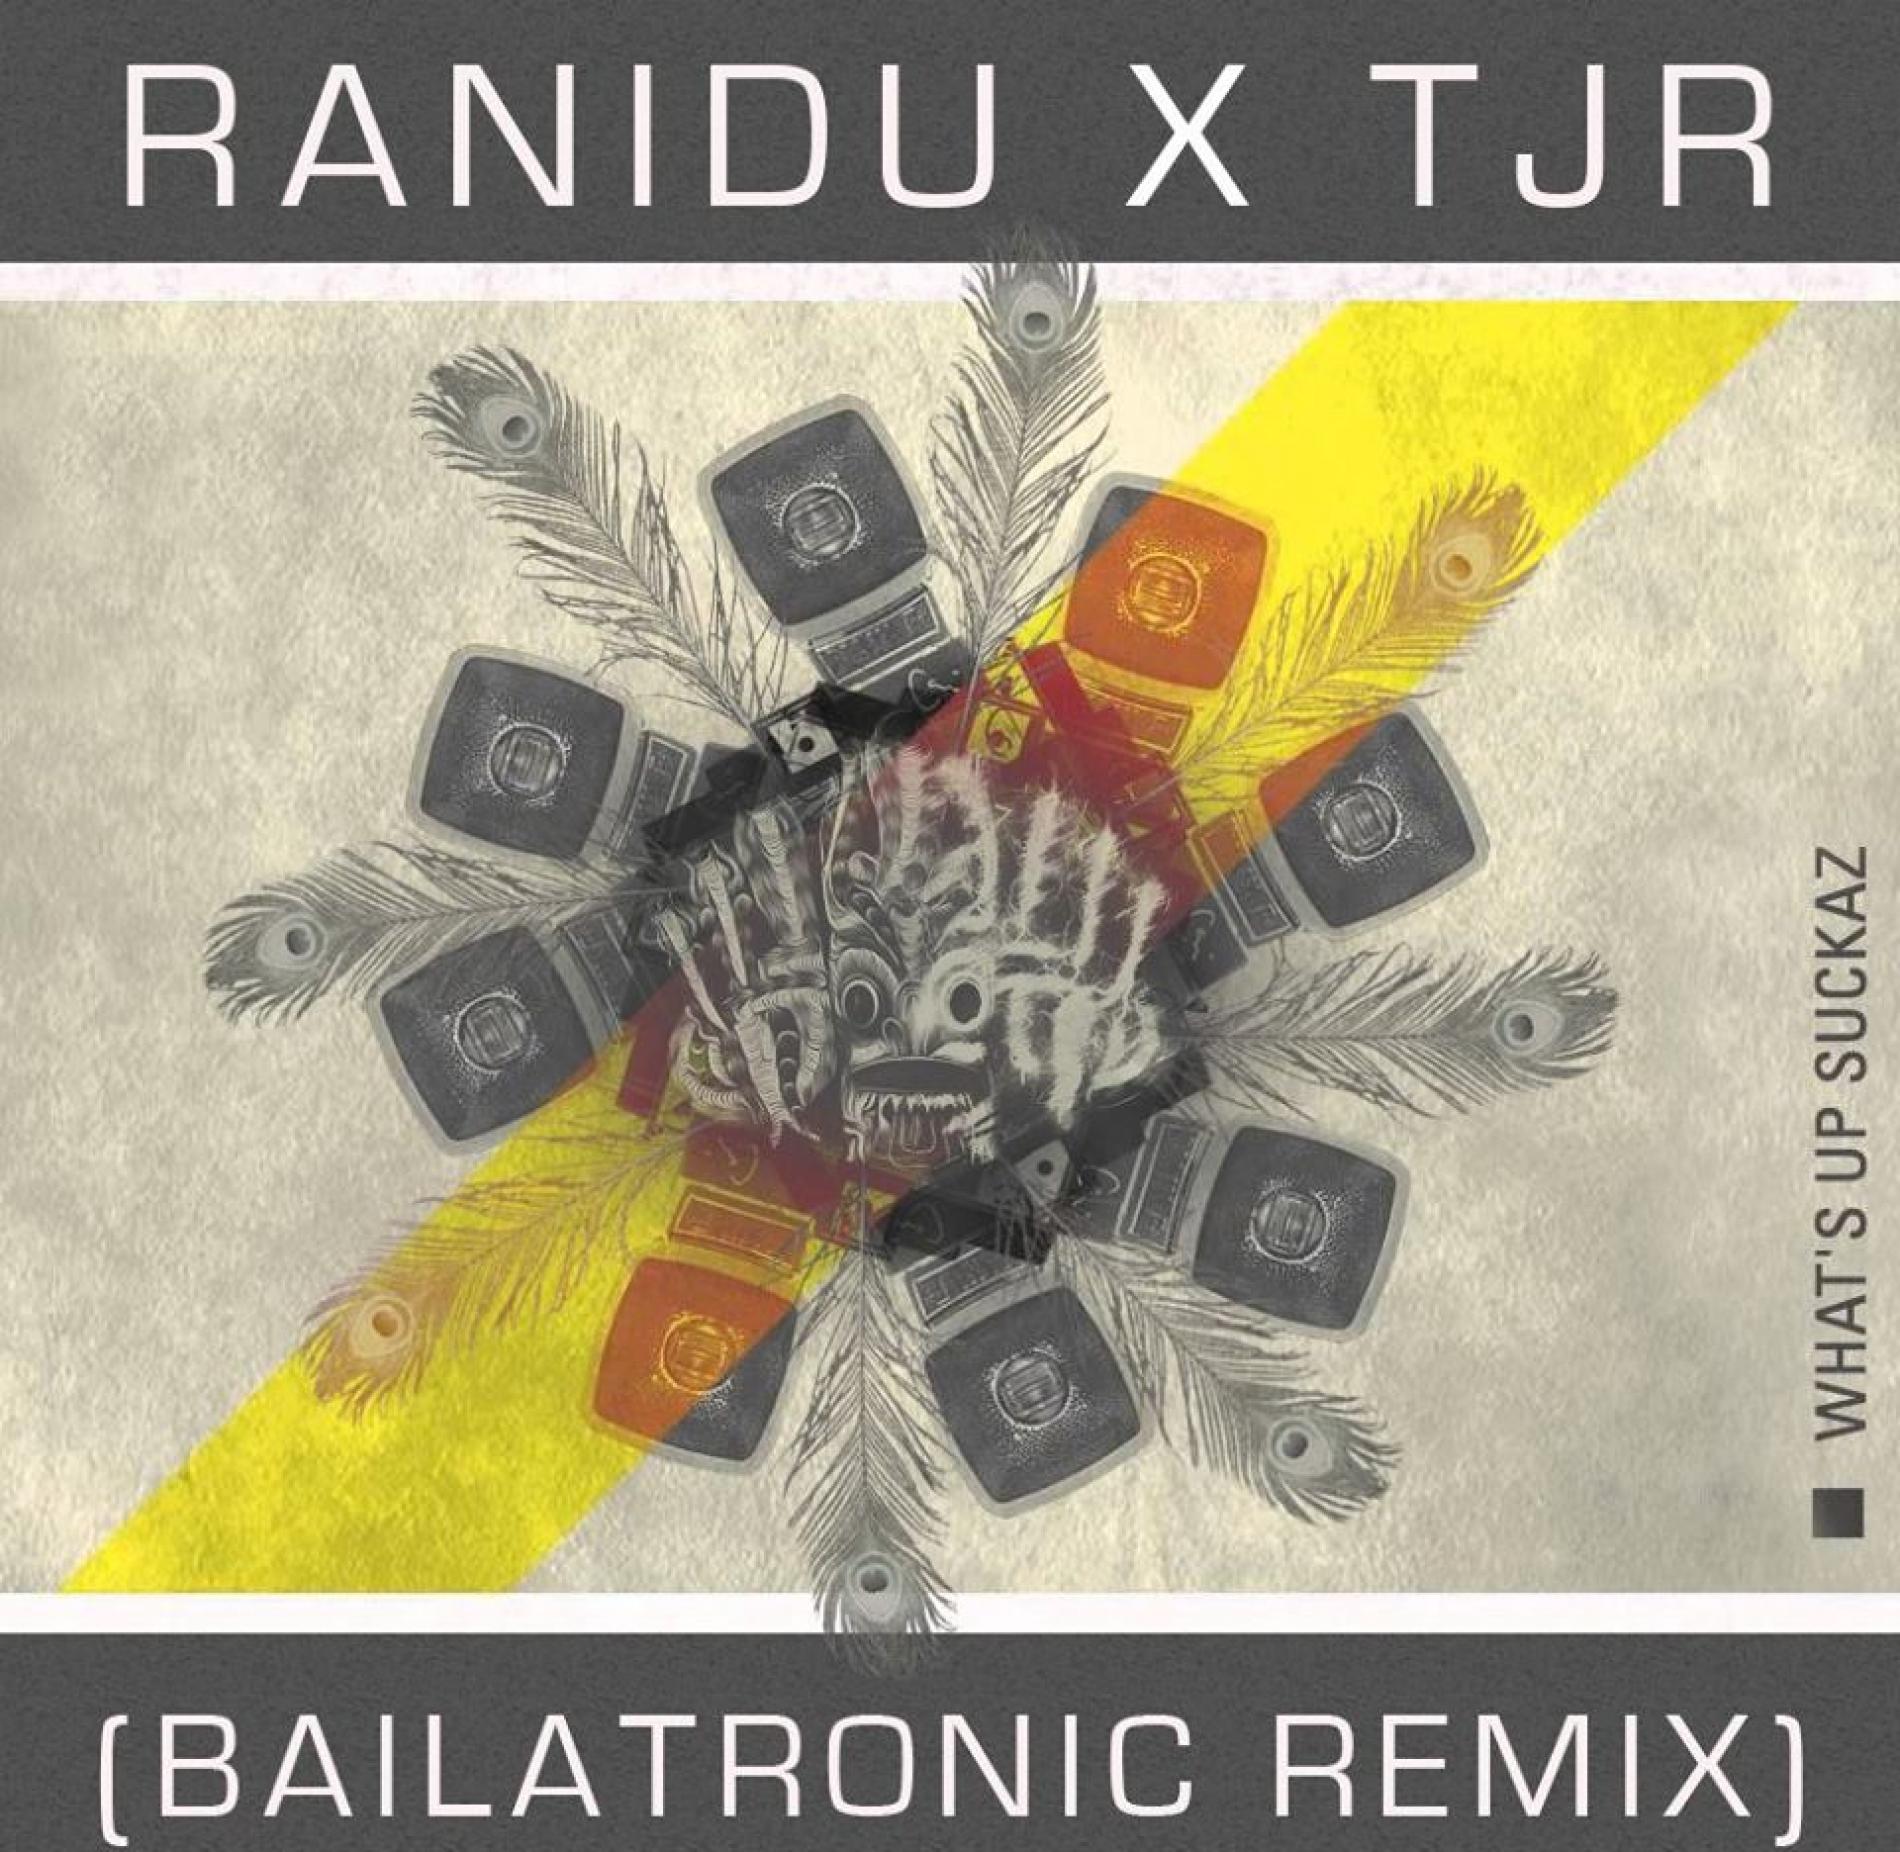 “What Up Suckaz” The Bailatronic Remix Coming Soon